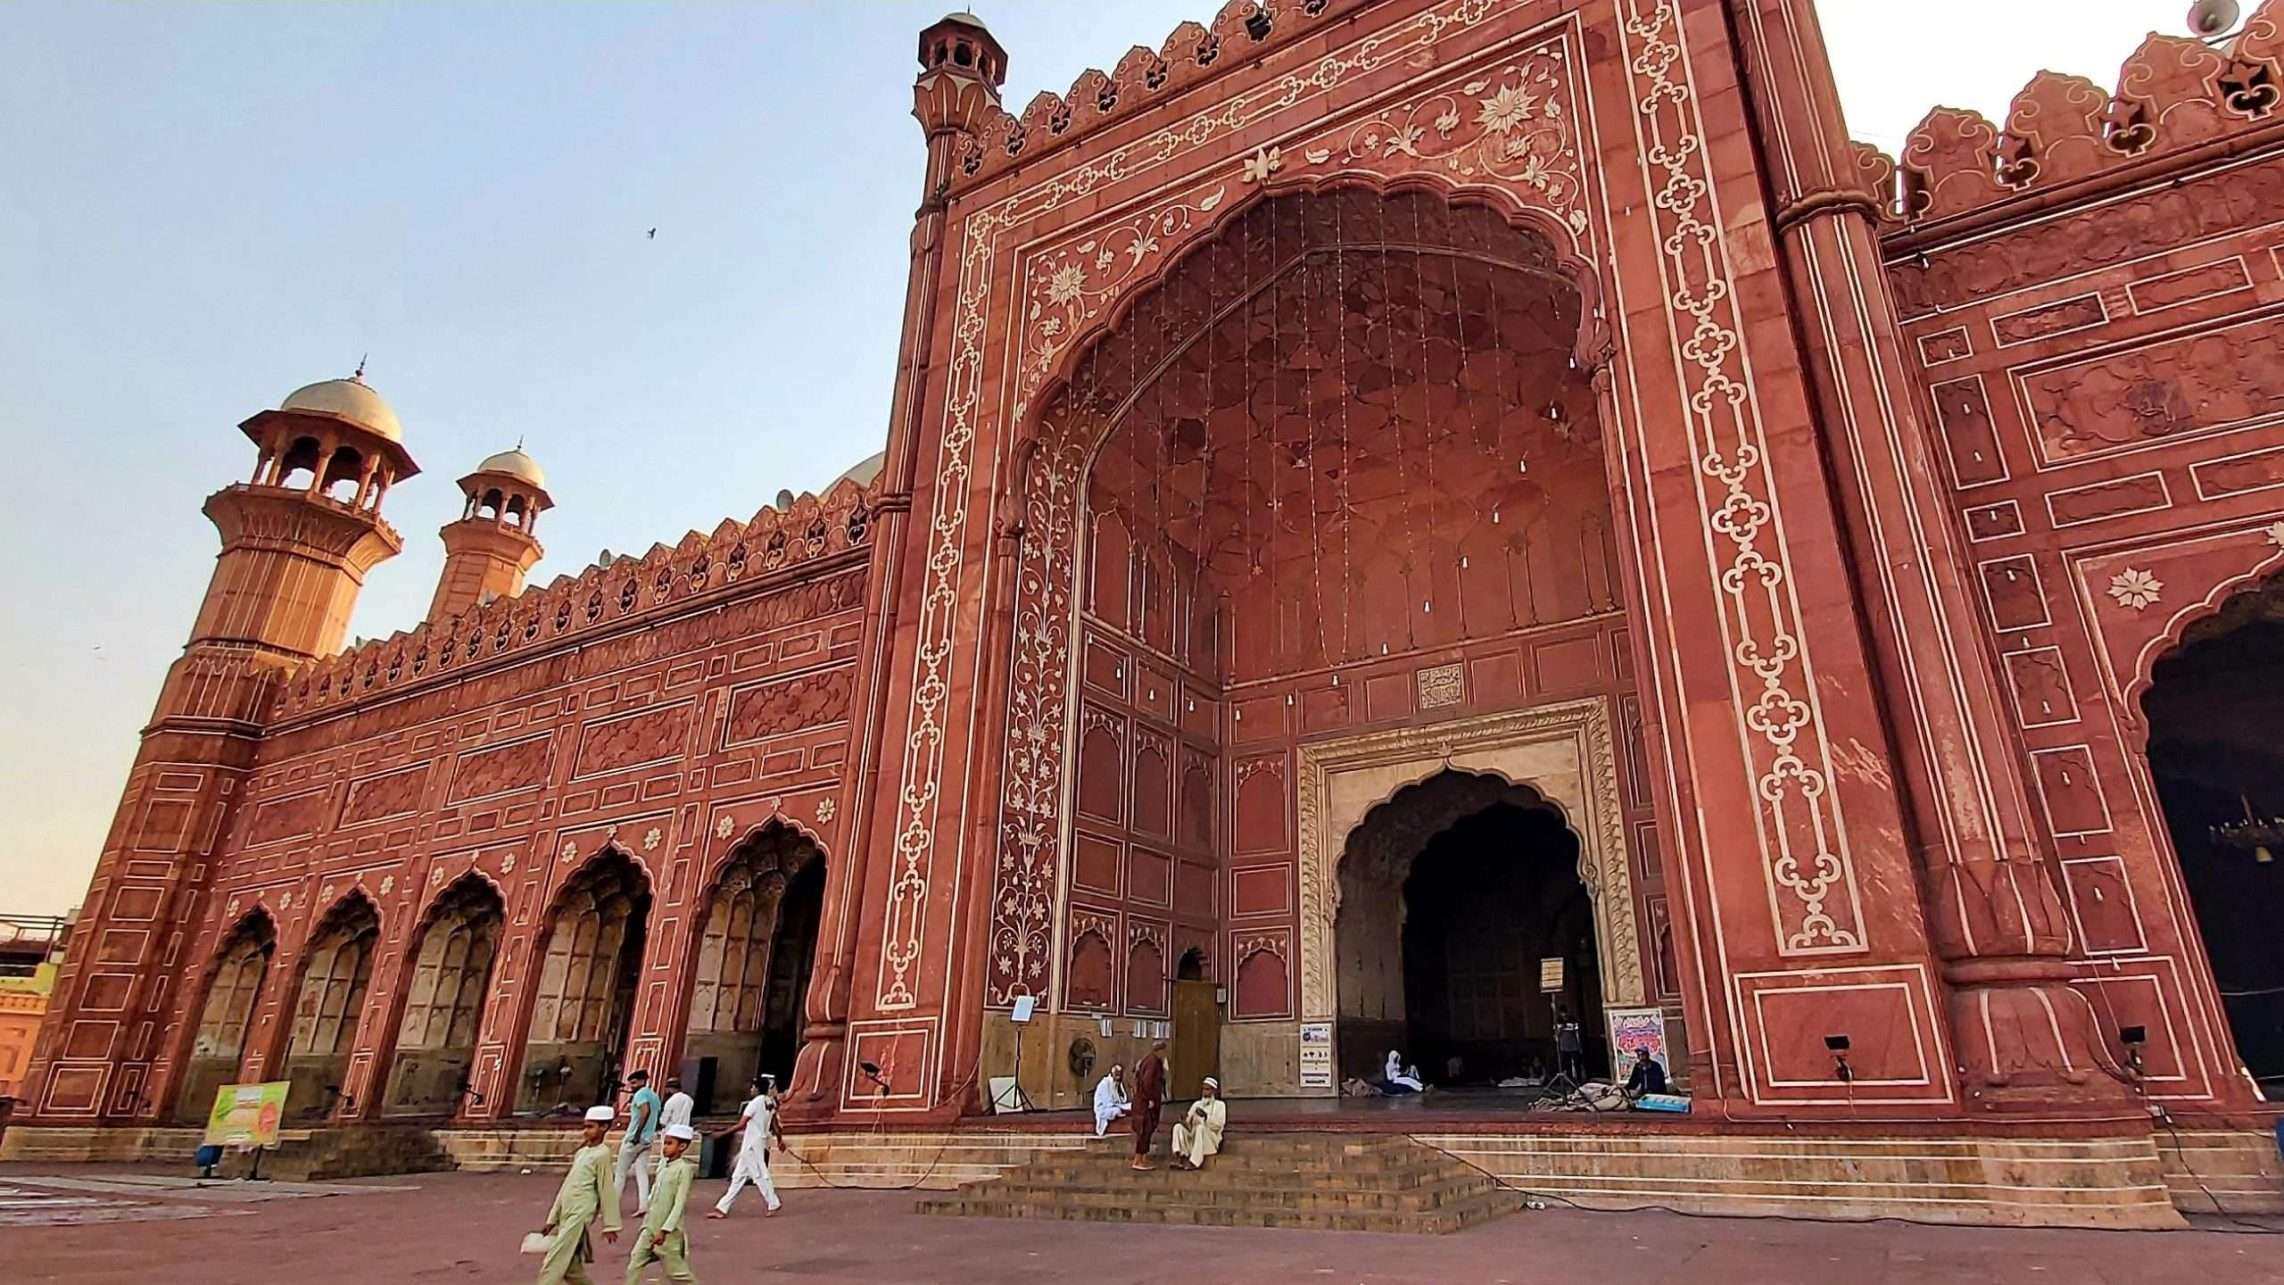 Badshahi Mosque Lahore Pakistan